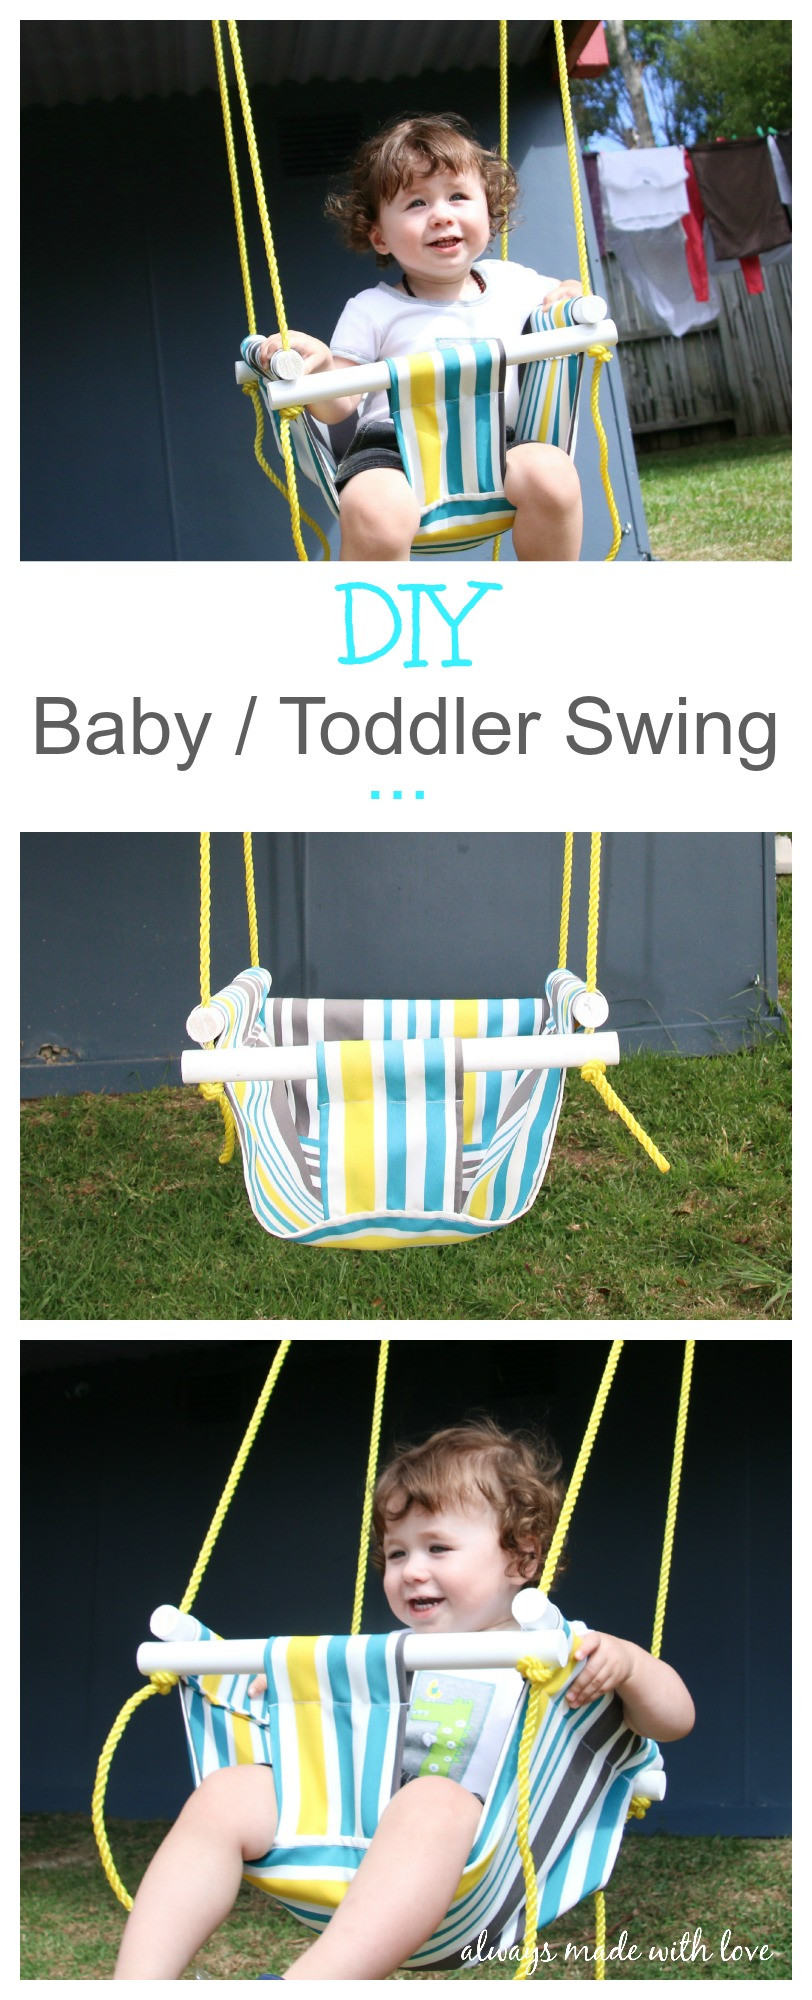 DIY Baby Swings
 DIY Baby Toddler Swing Always Made With Love